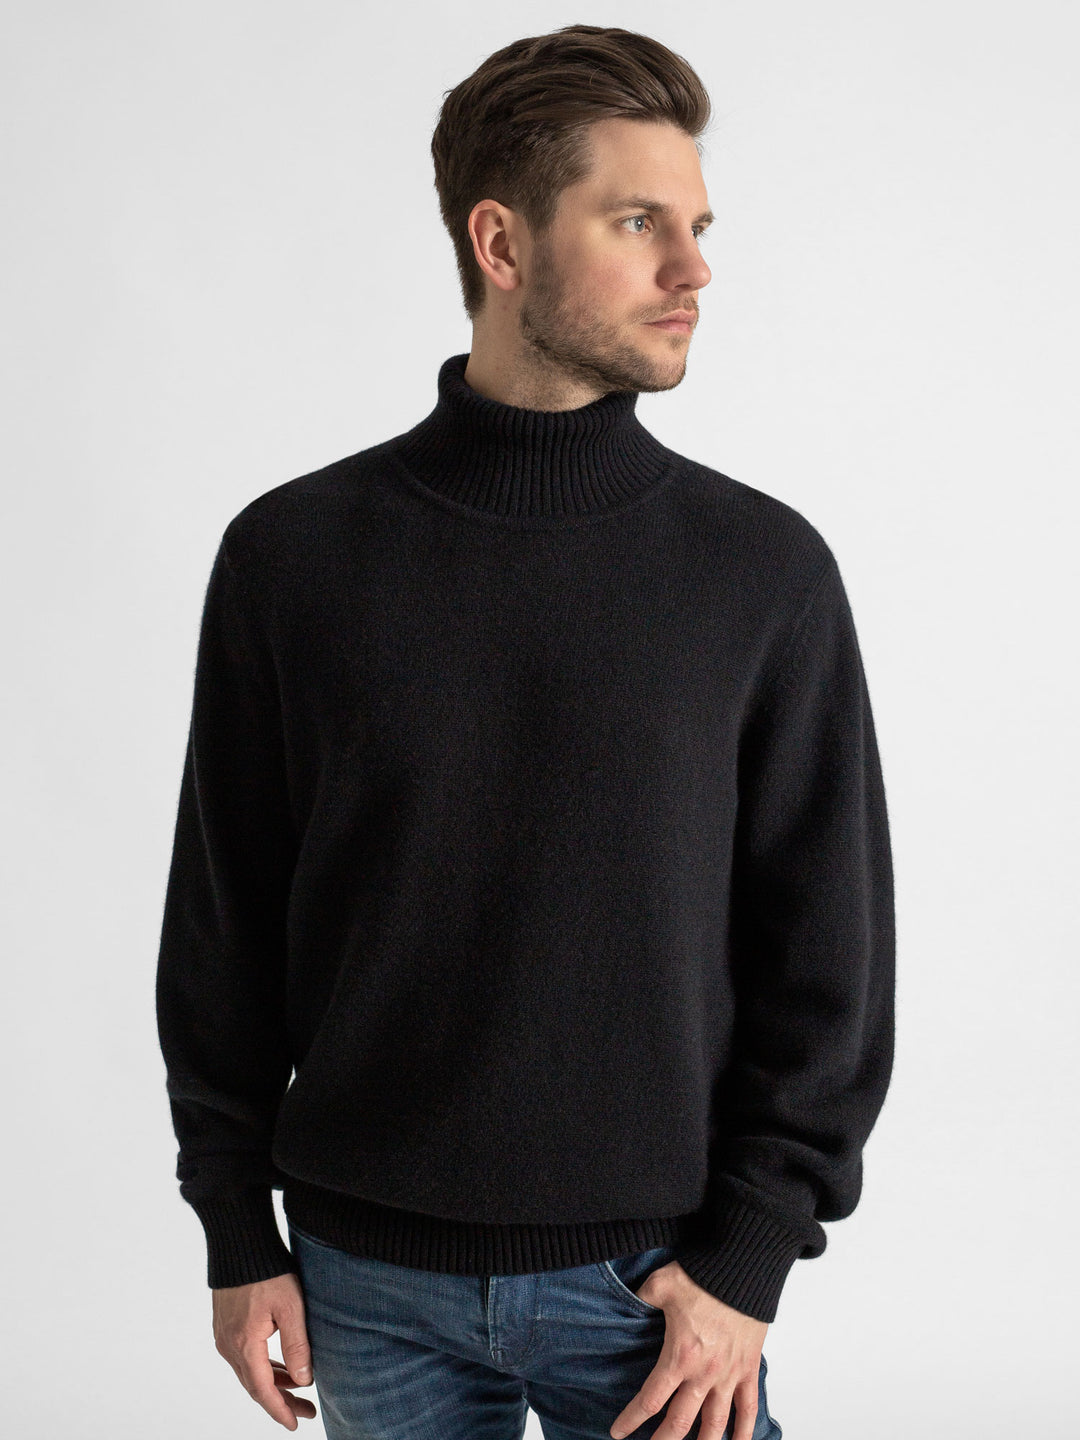 Turtle neck cashmere sweater. 100% cashmere. Scandinavian design. Color: Black